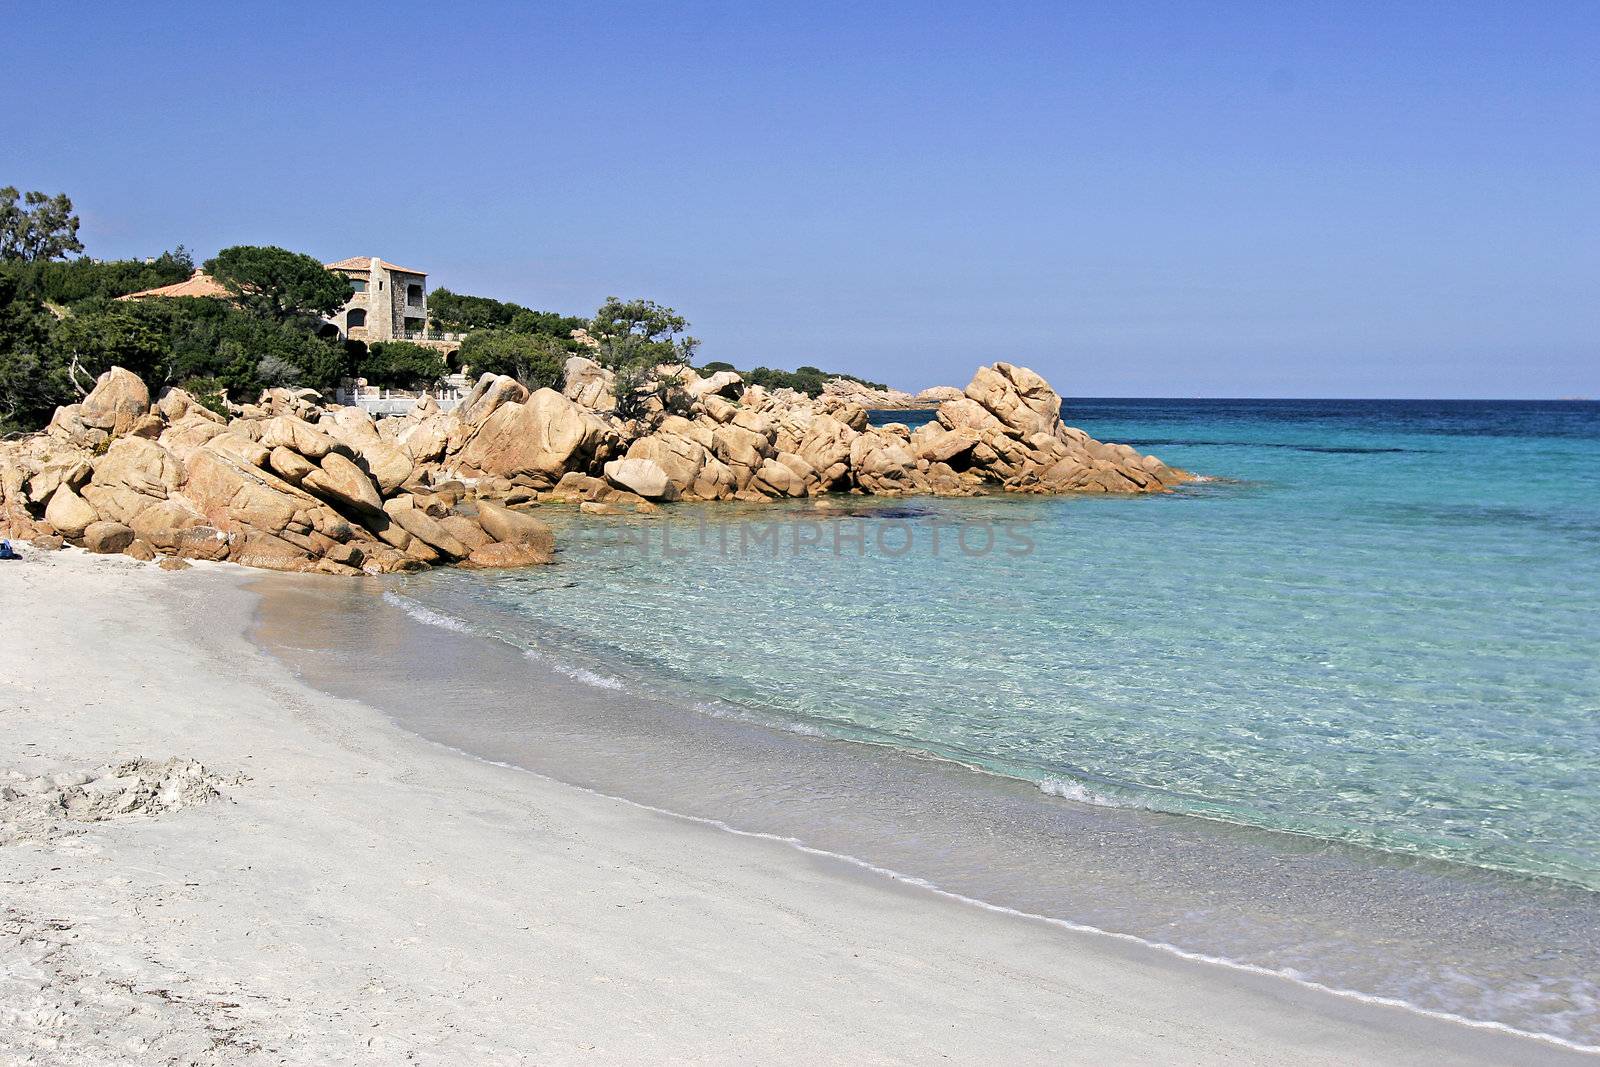 Costa Smeralda, emerald coast of Sardinia. Costa Smeralda, Smaragdküste